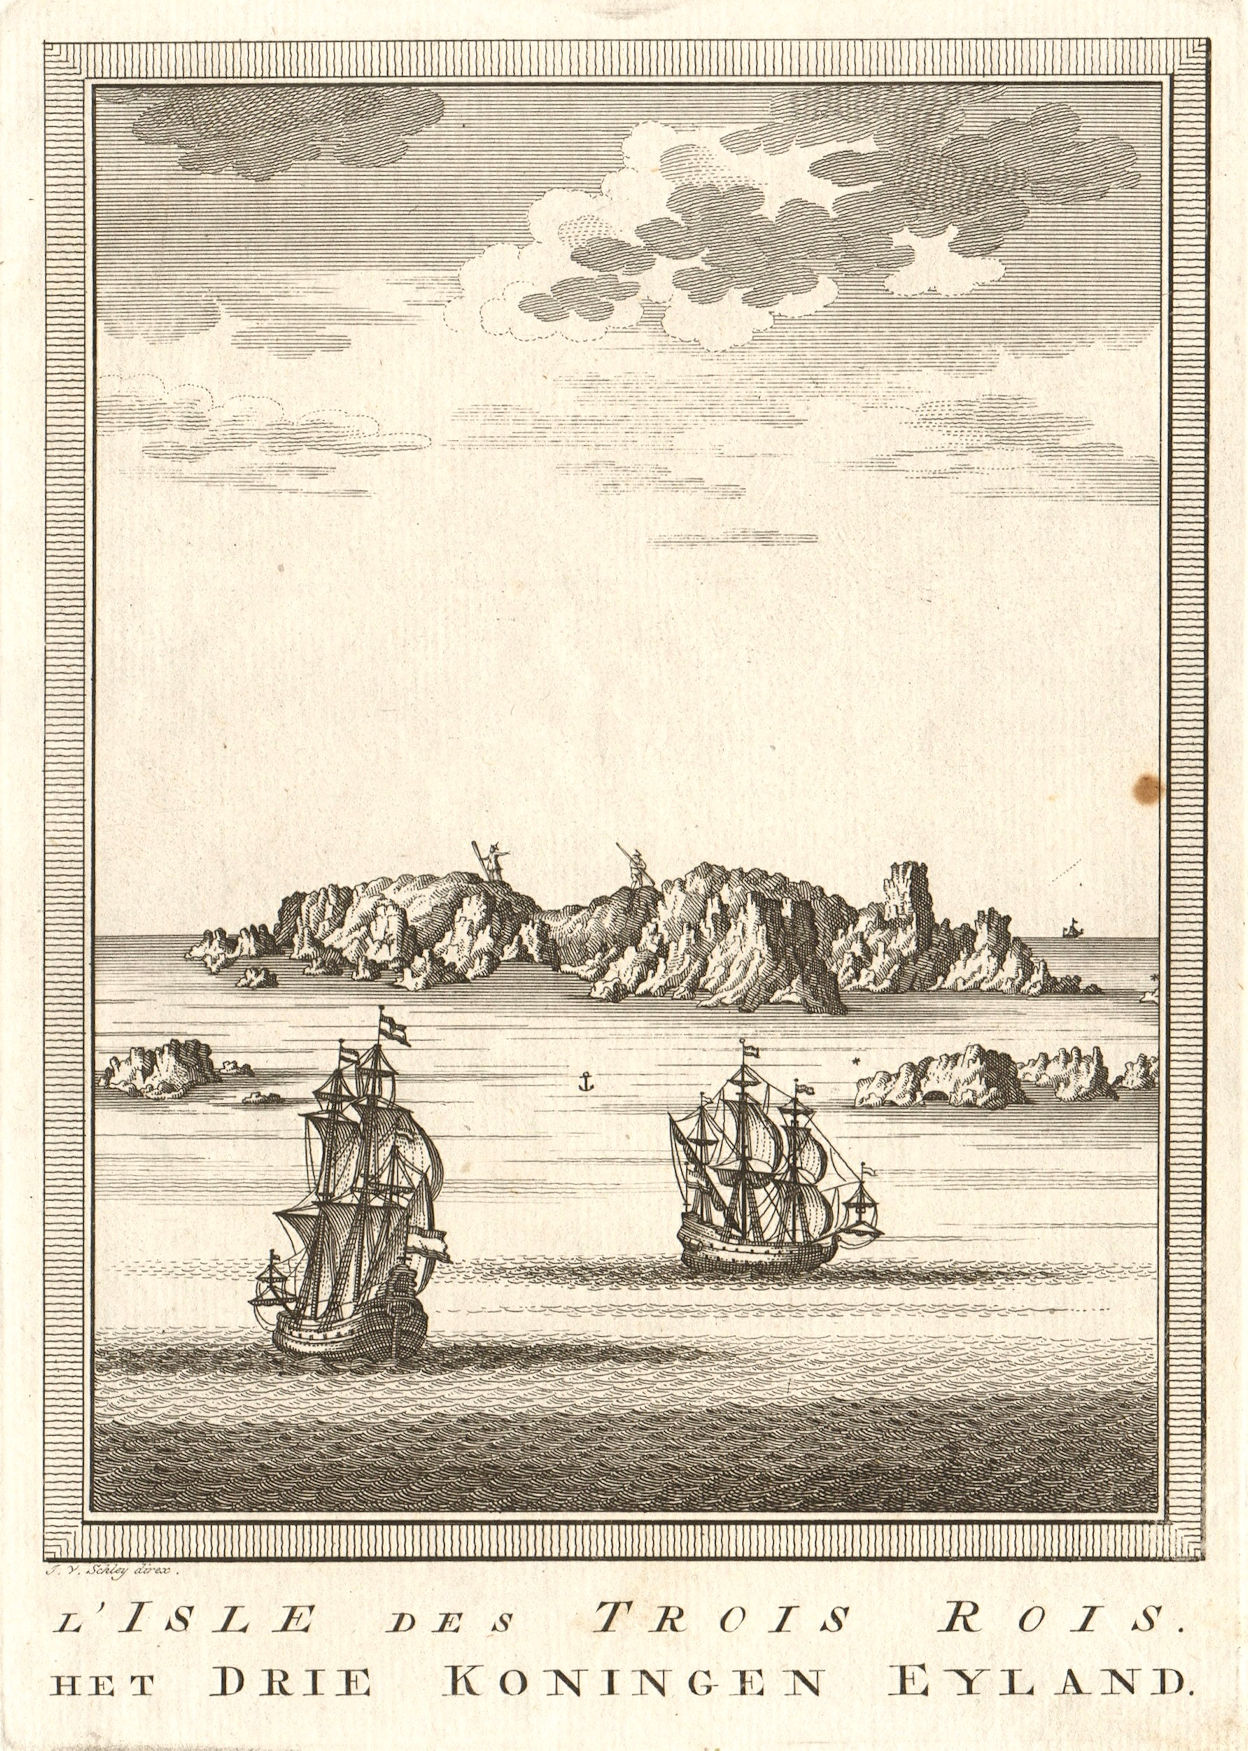 Three Kings Islands / Manawatawh, New Zealand. Abel Tasman 1643. SCHLEY 1758